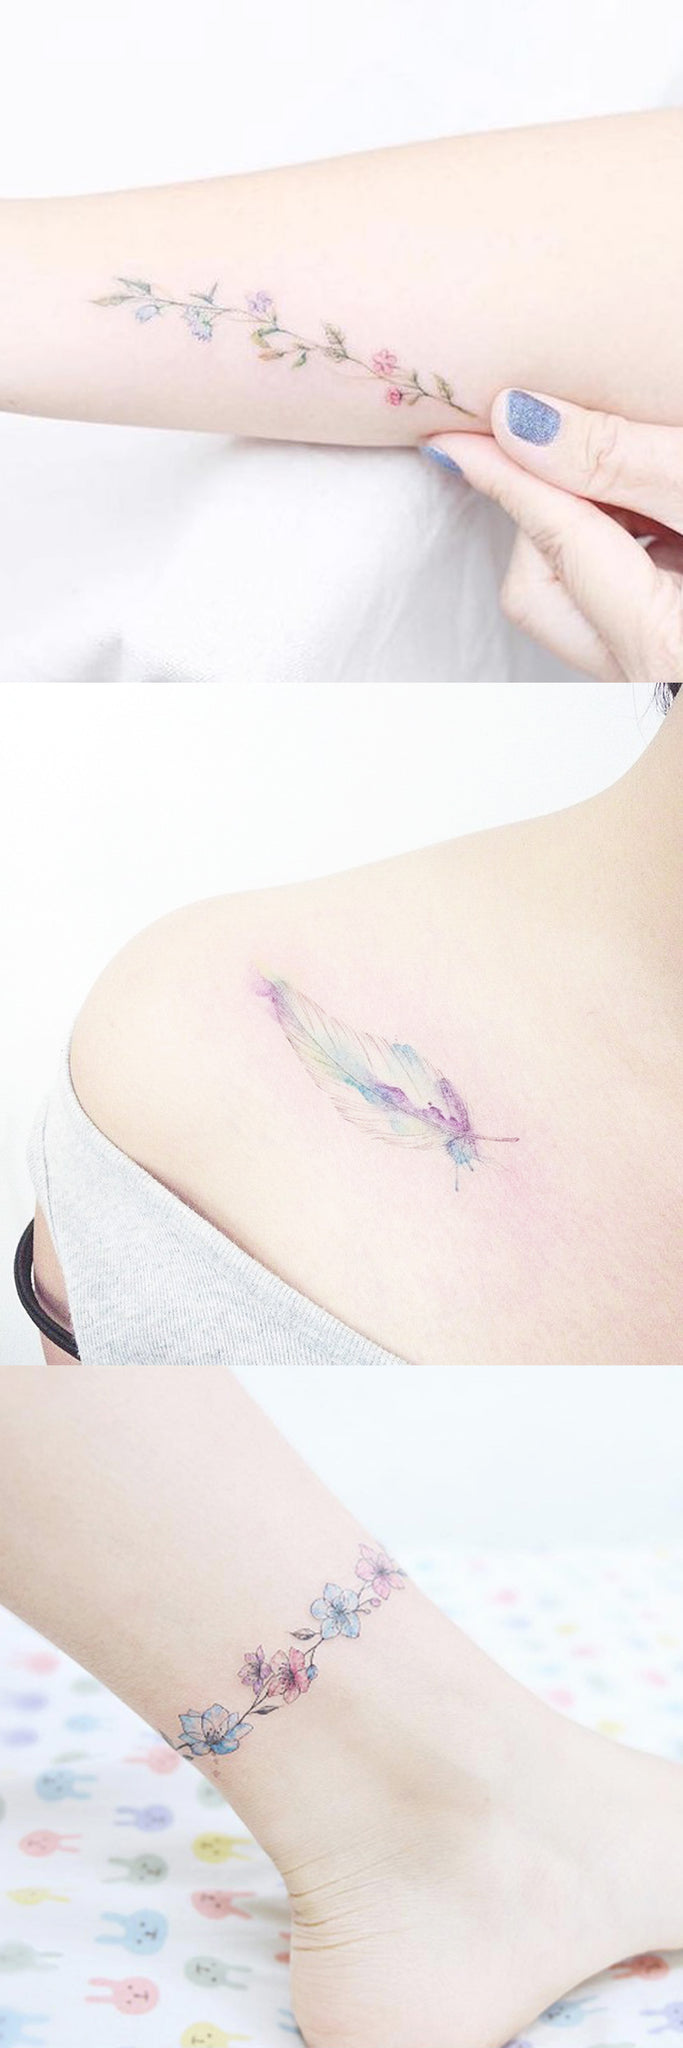 Opal Flower Forearm Tattoo Ideas - Floral Rainbow Shoulder Tatt for Women - Small Feather Leaf Ankle Tat - MyBodiArt.com